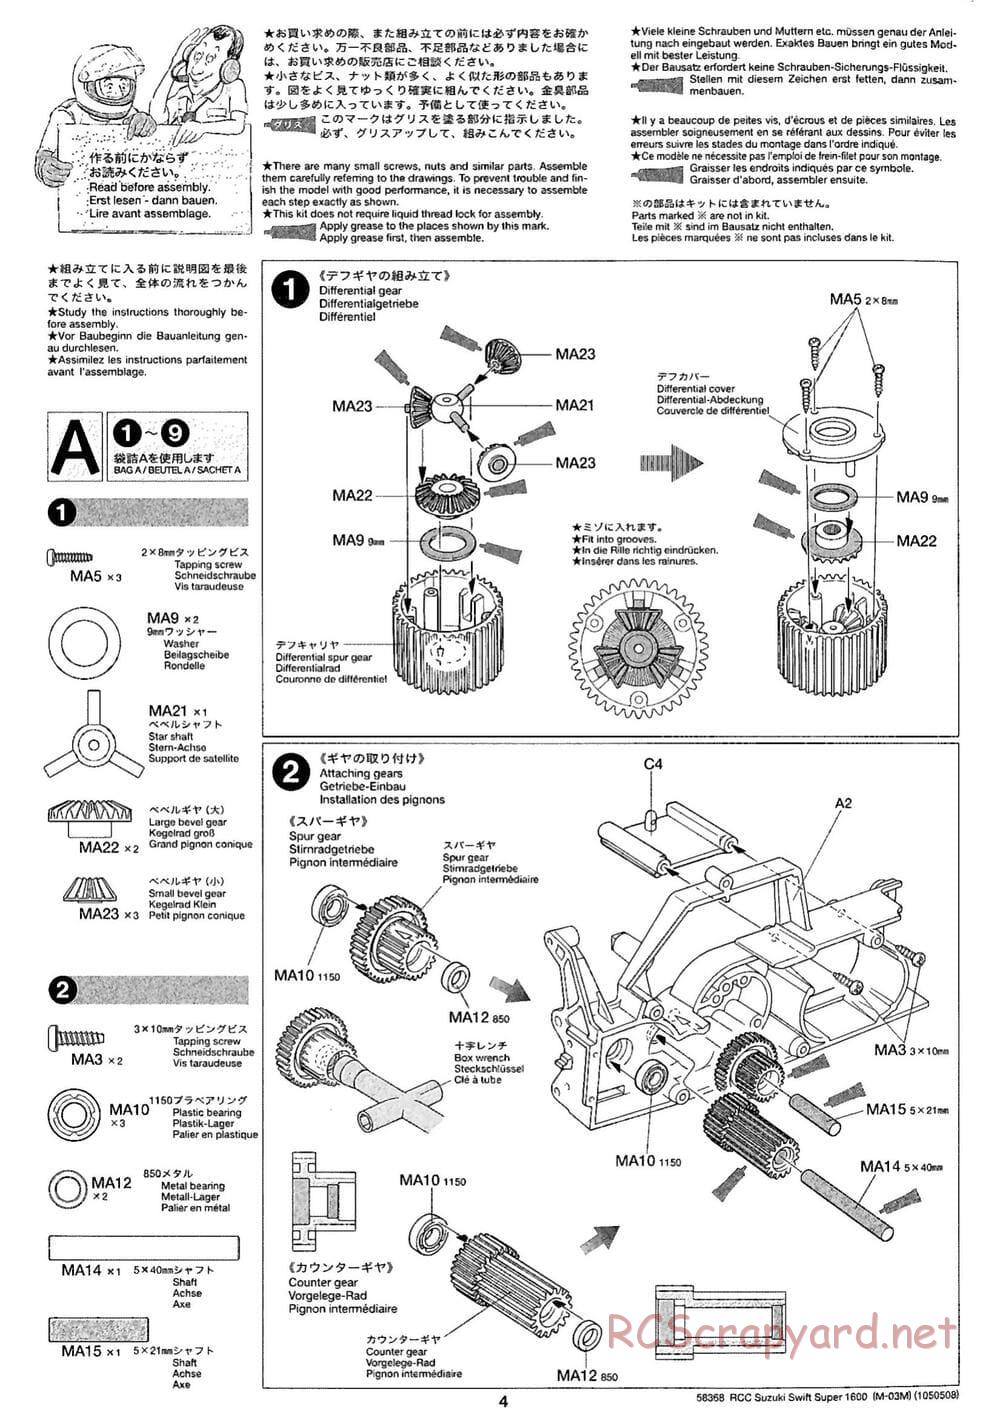 Tamiya - Suzuki Swift Super 1600 - M03M Chassis - Manual - Page 4